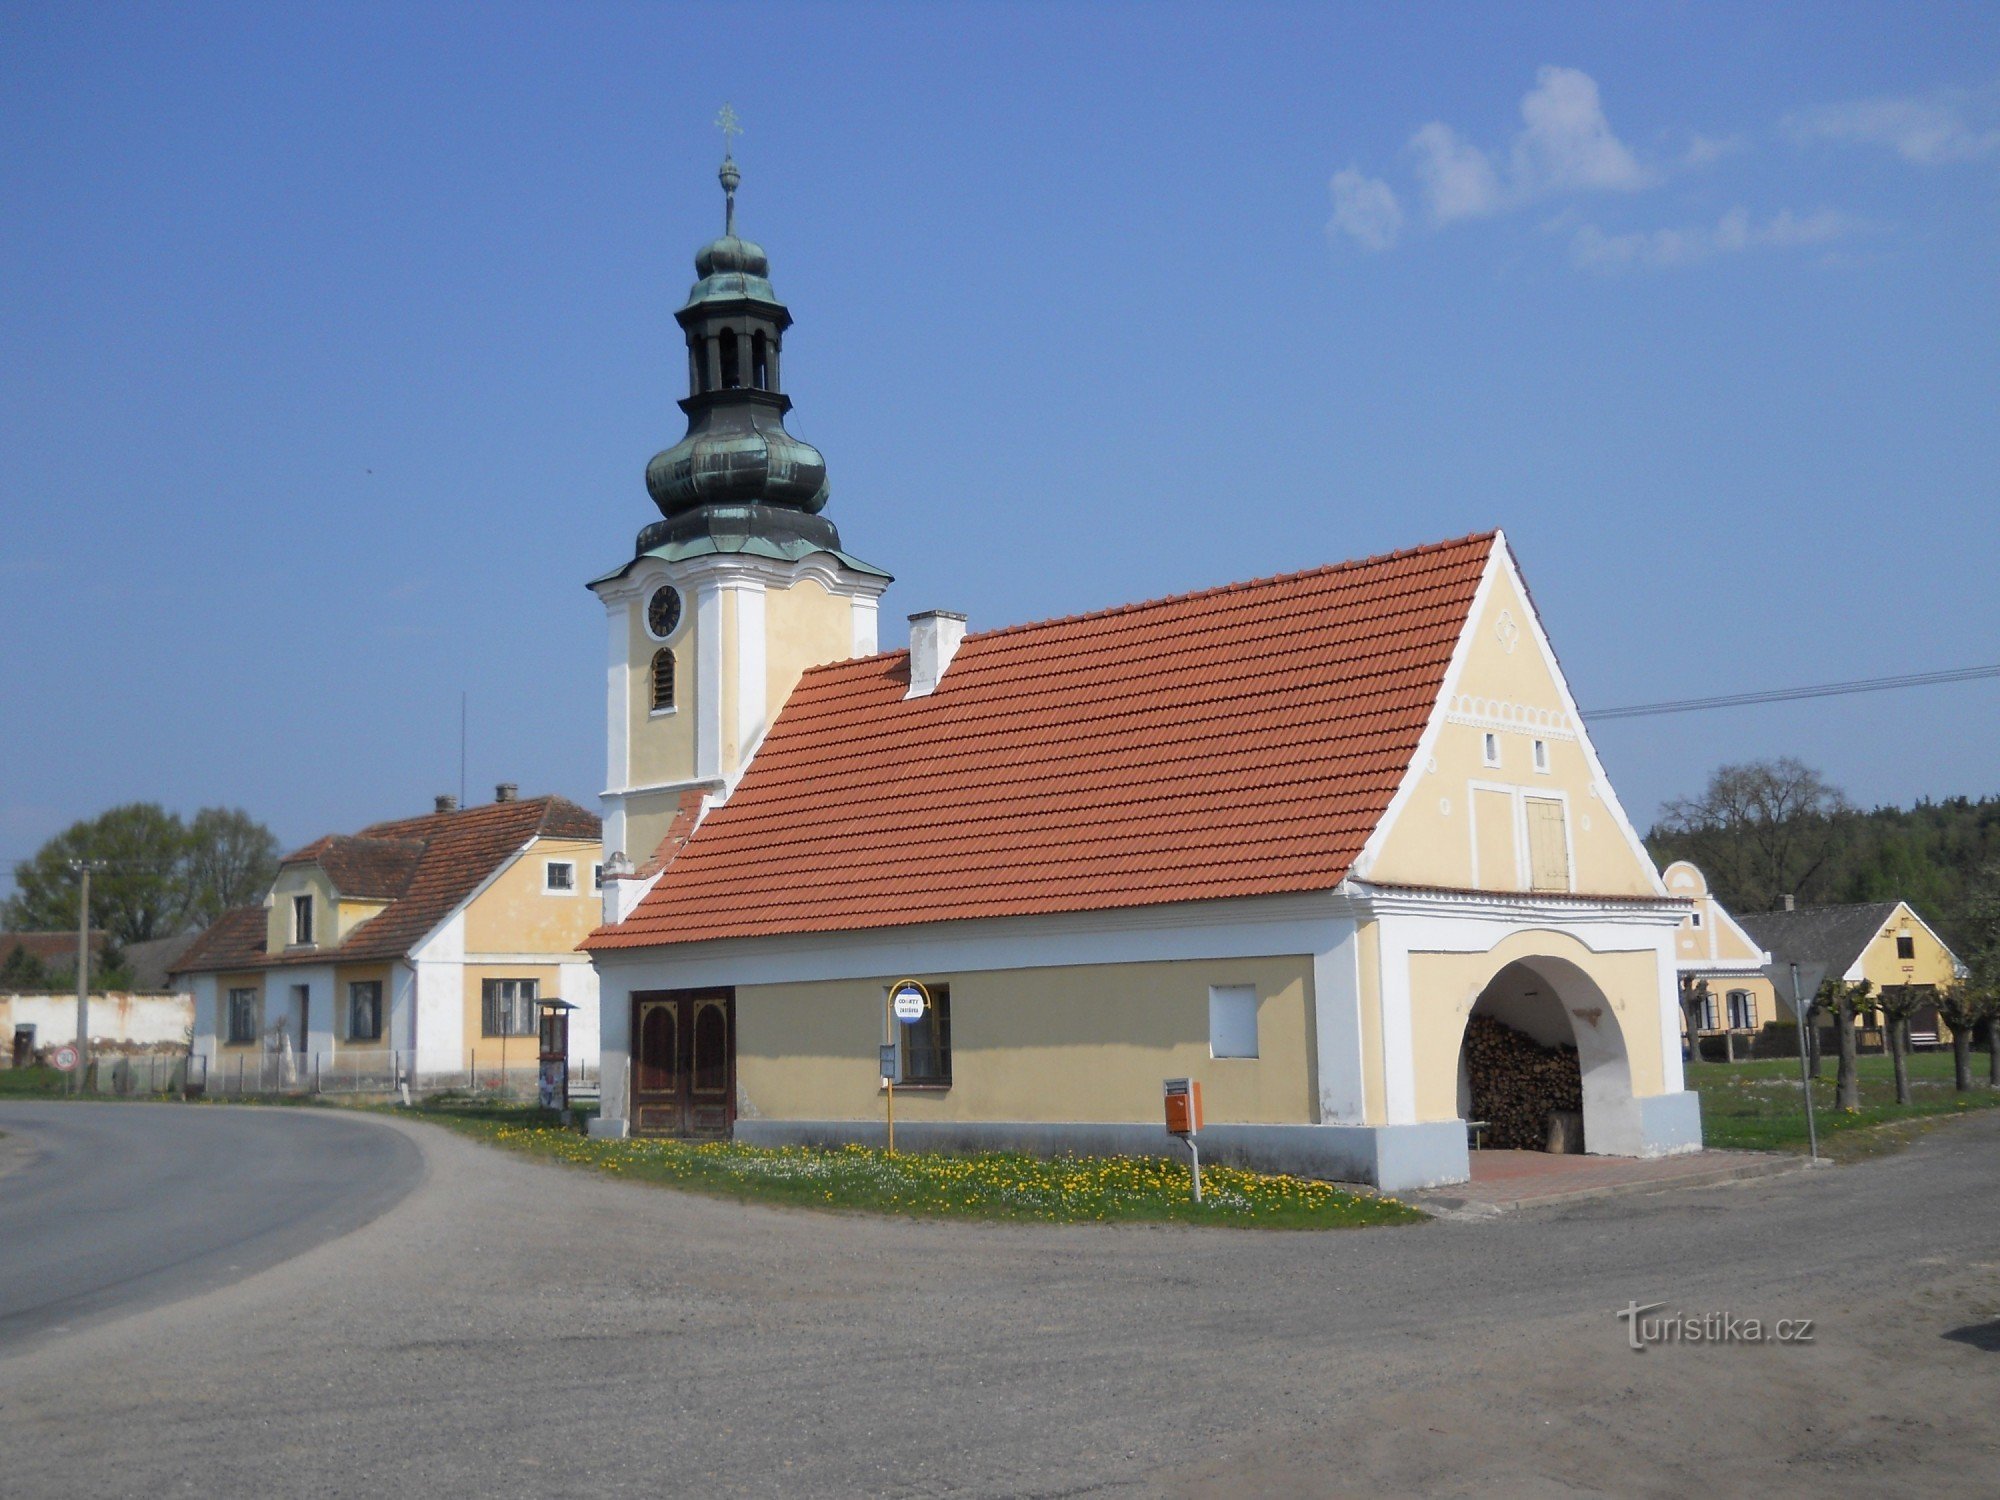 Svinky - chapelle avec ancien forger